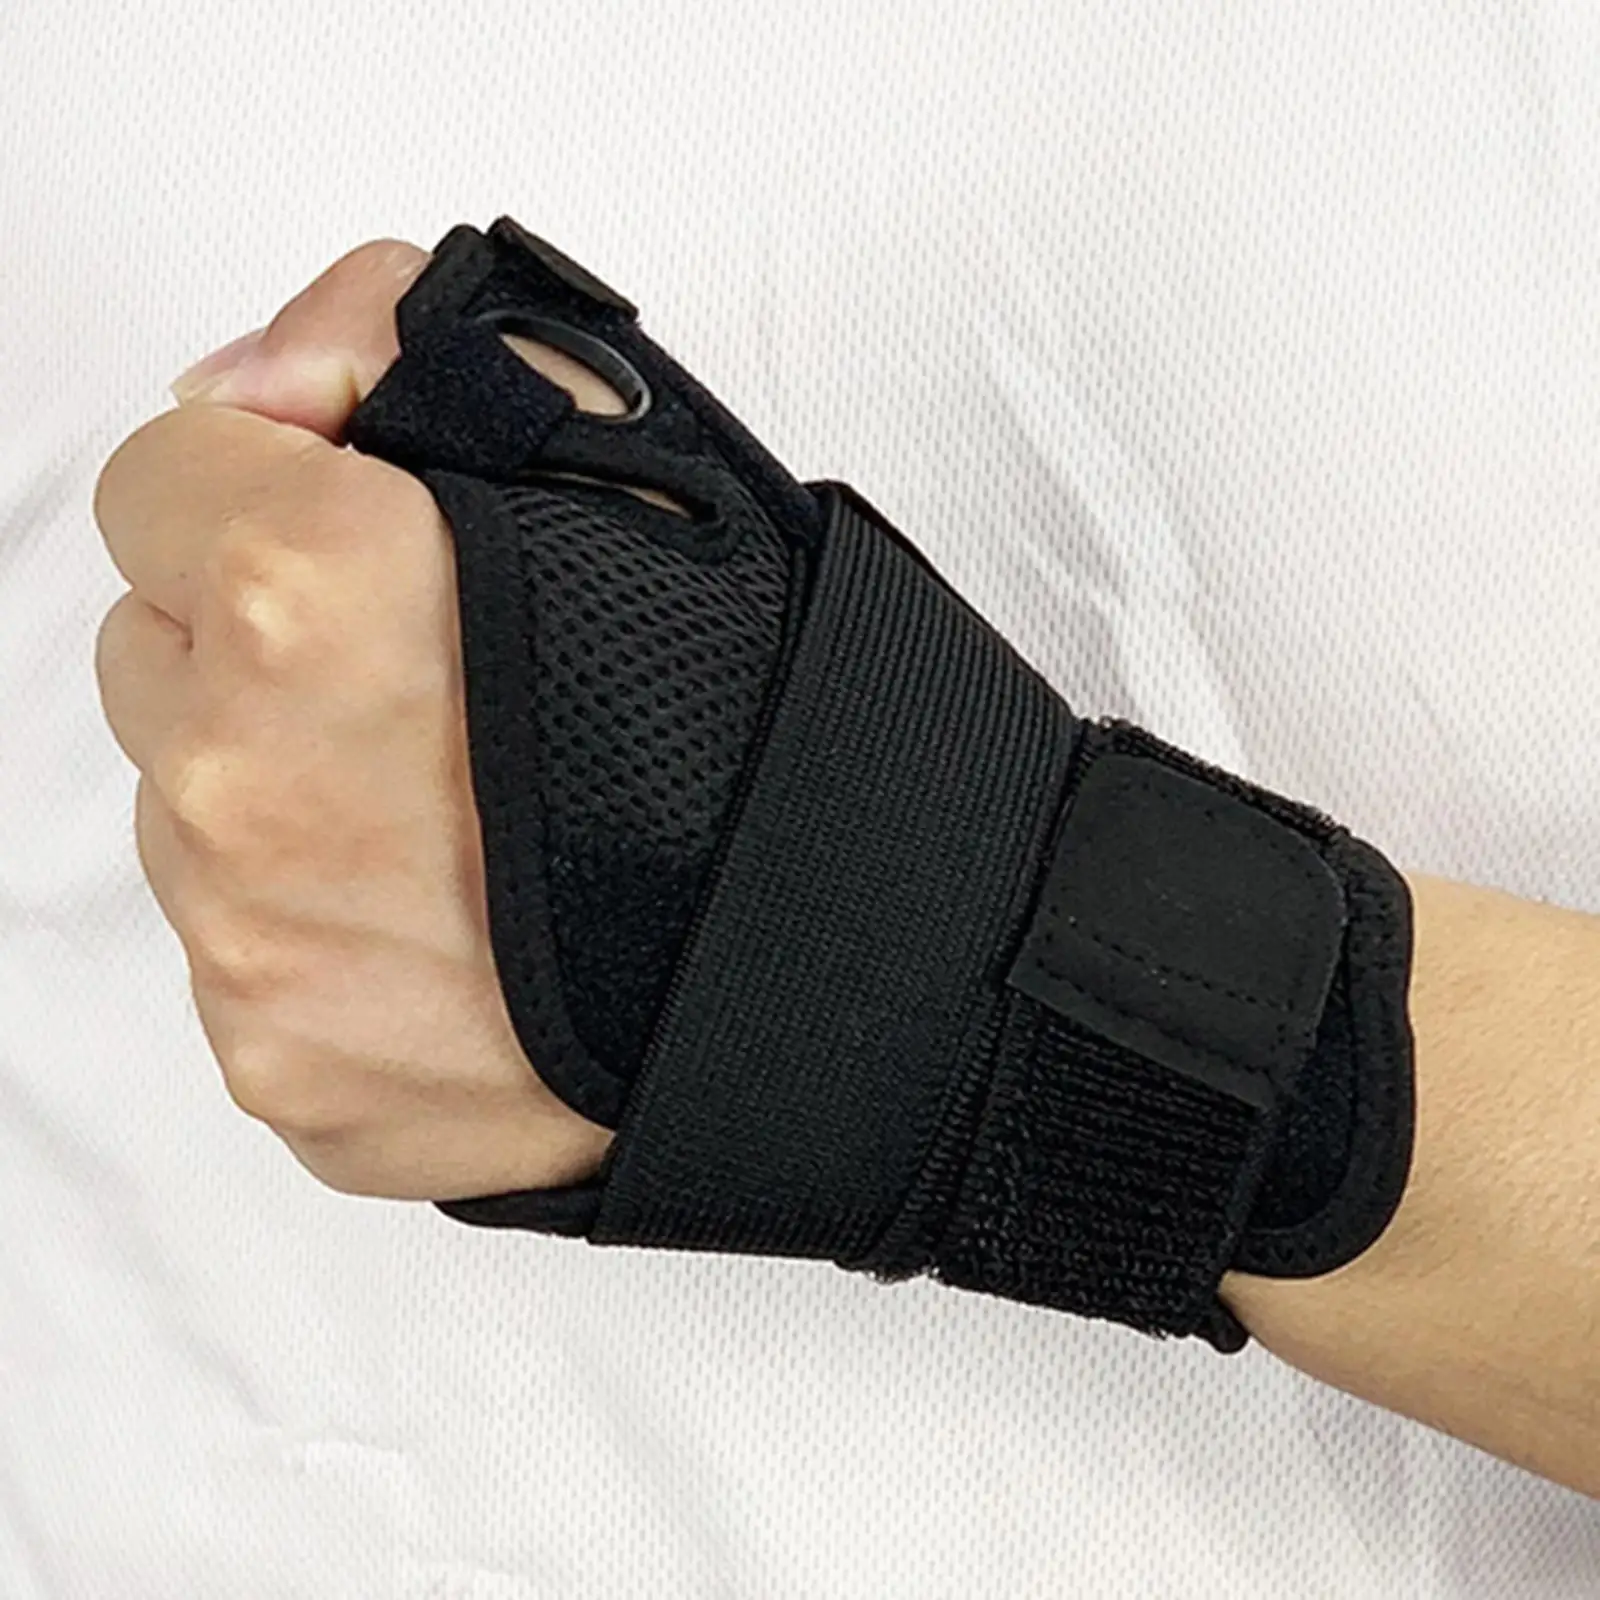 Thumb Splint Brace Sprains Osteoarthritis Recovery Strains Arthritis Adjustable